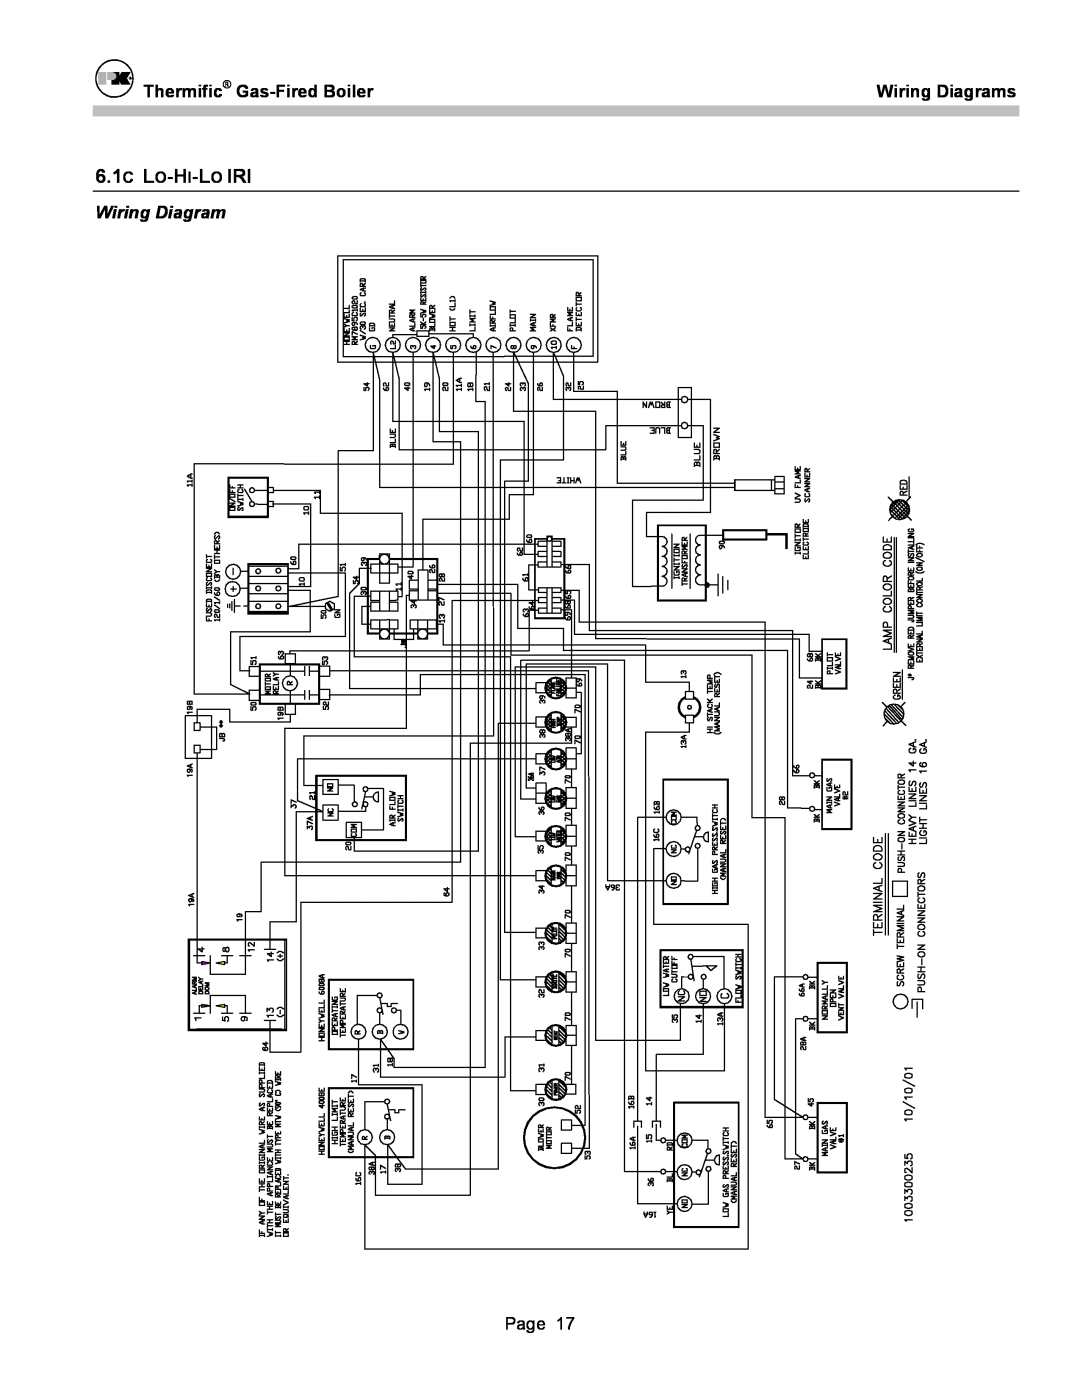 Patterson-Kelley DVSCM-02 owner manual 6.1C LO-HI-LO IRI, Thermific Gas-FiredBoiler, Wiring Diagrams 